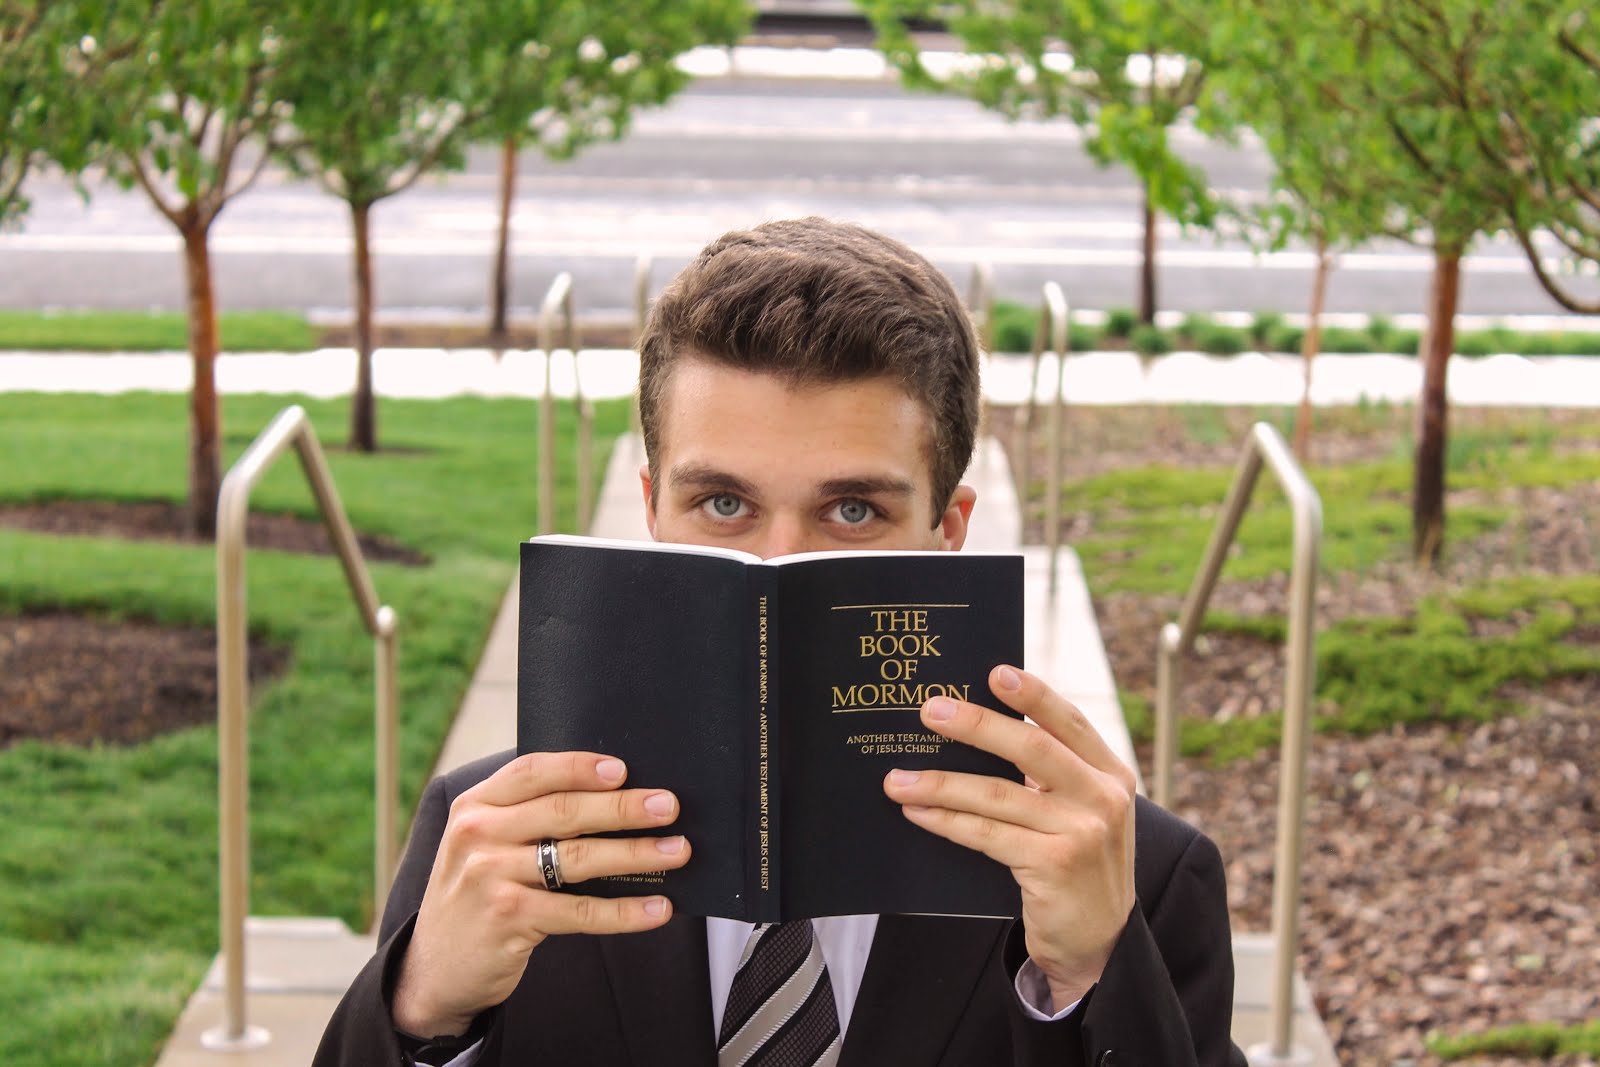 Request a Free Book of Mormon